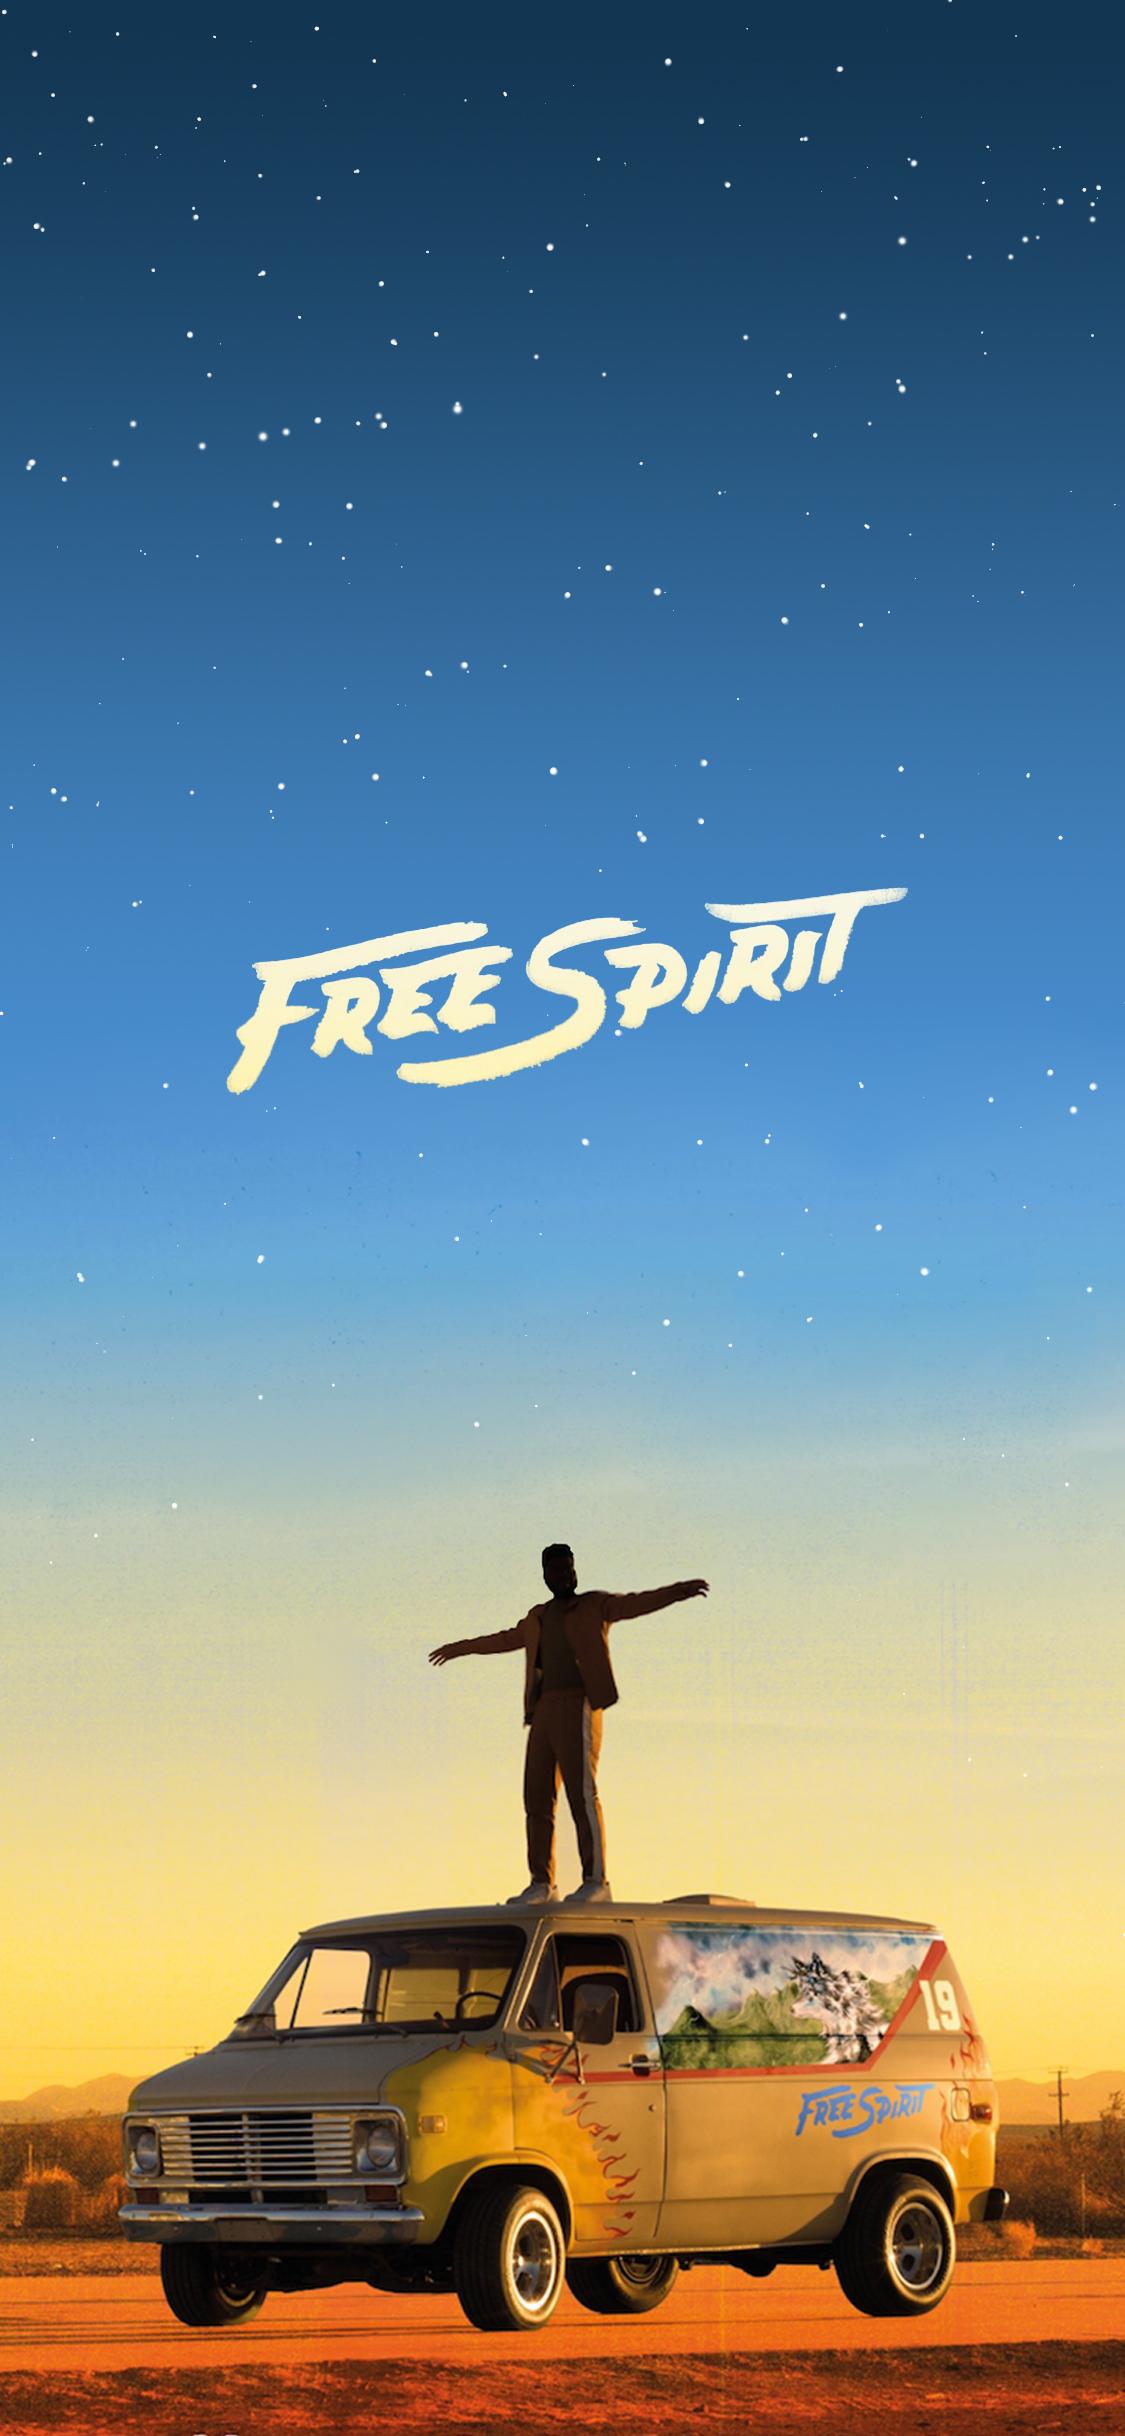 x 2436][Khalid] Free Spirit iPhone X